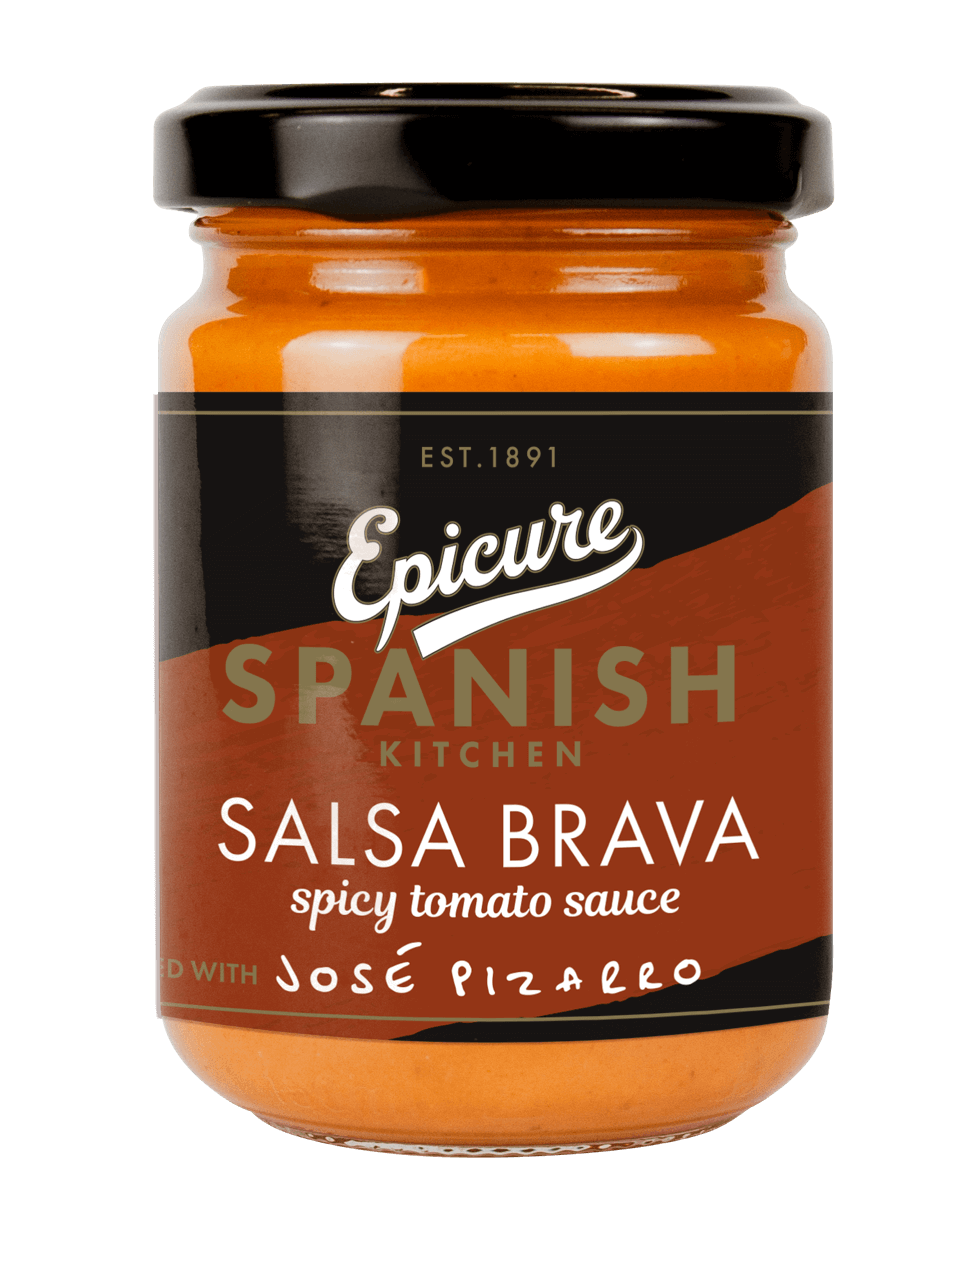 SALSA BRAVA spicy tomato sauce - Spanish Kitchen at Epicure